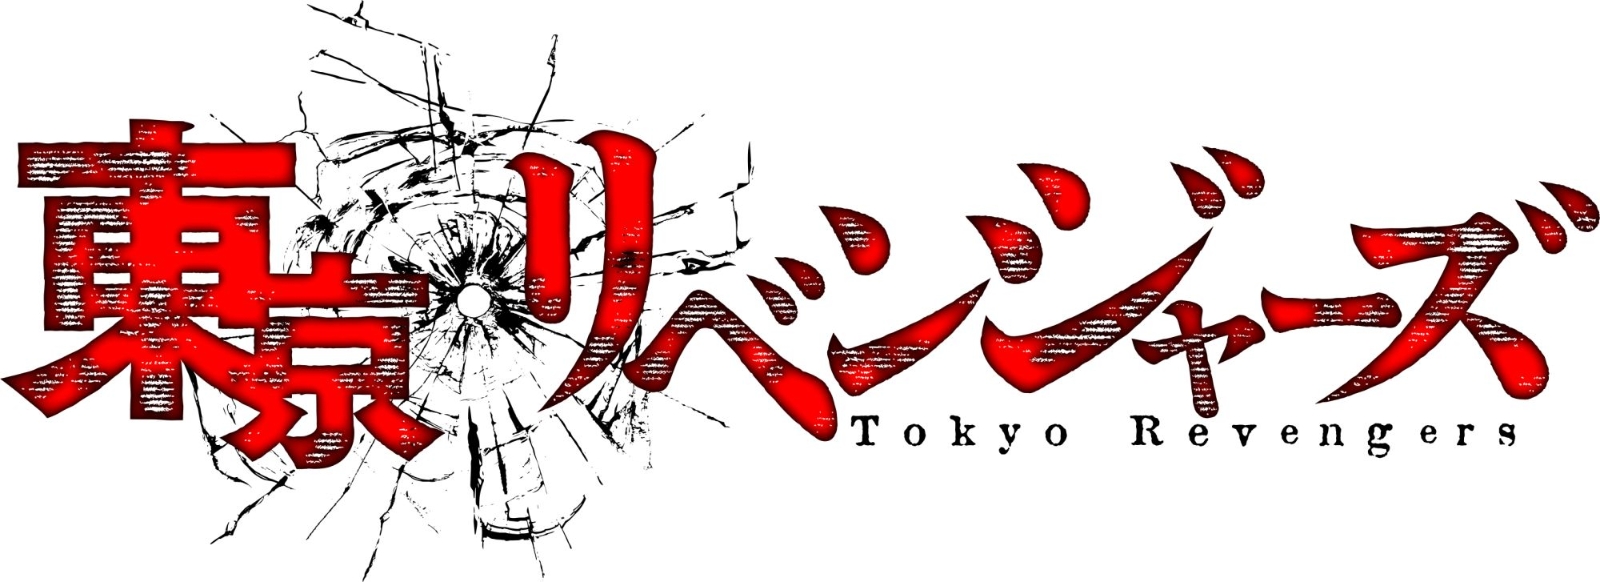 TVアニメ『東京リベンジャーズ』オリジナルサウンドトラック画像